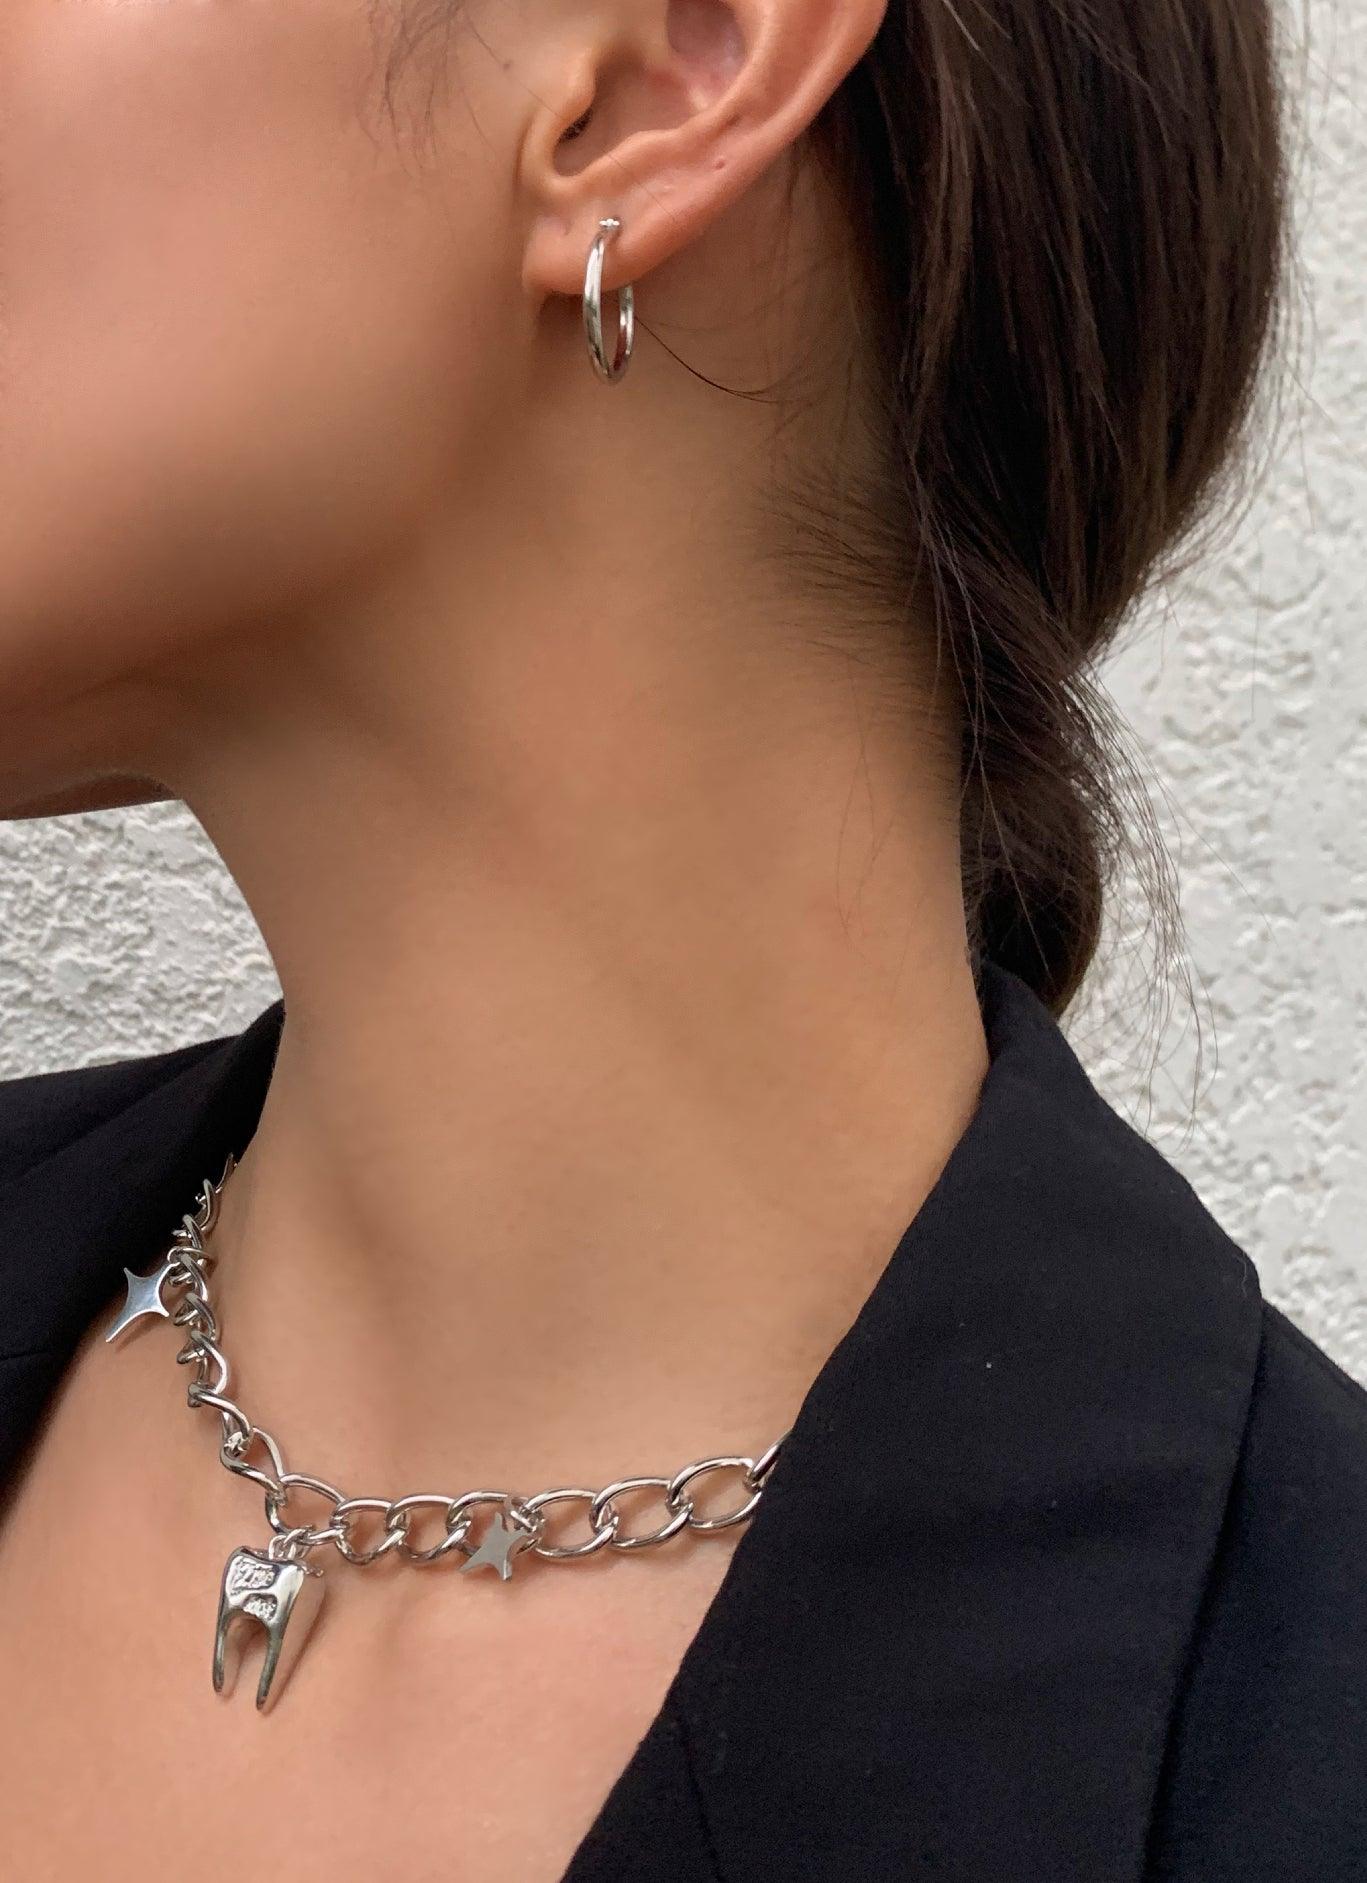 The Simple Hoop Earrings in Silver - En Route Jewelry